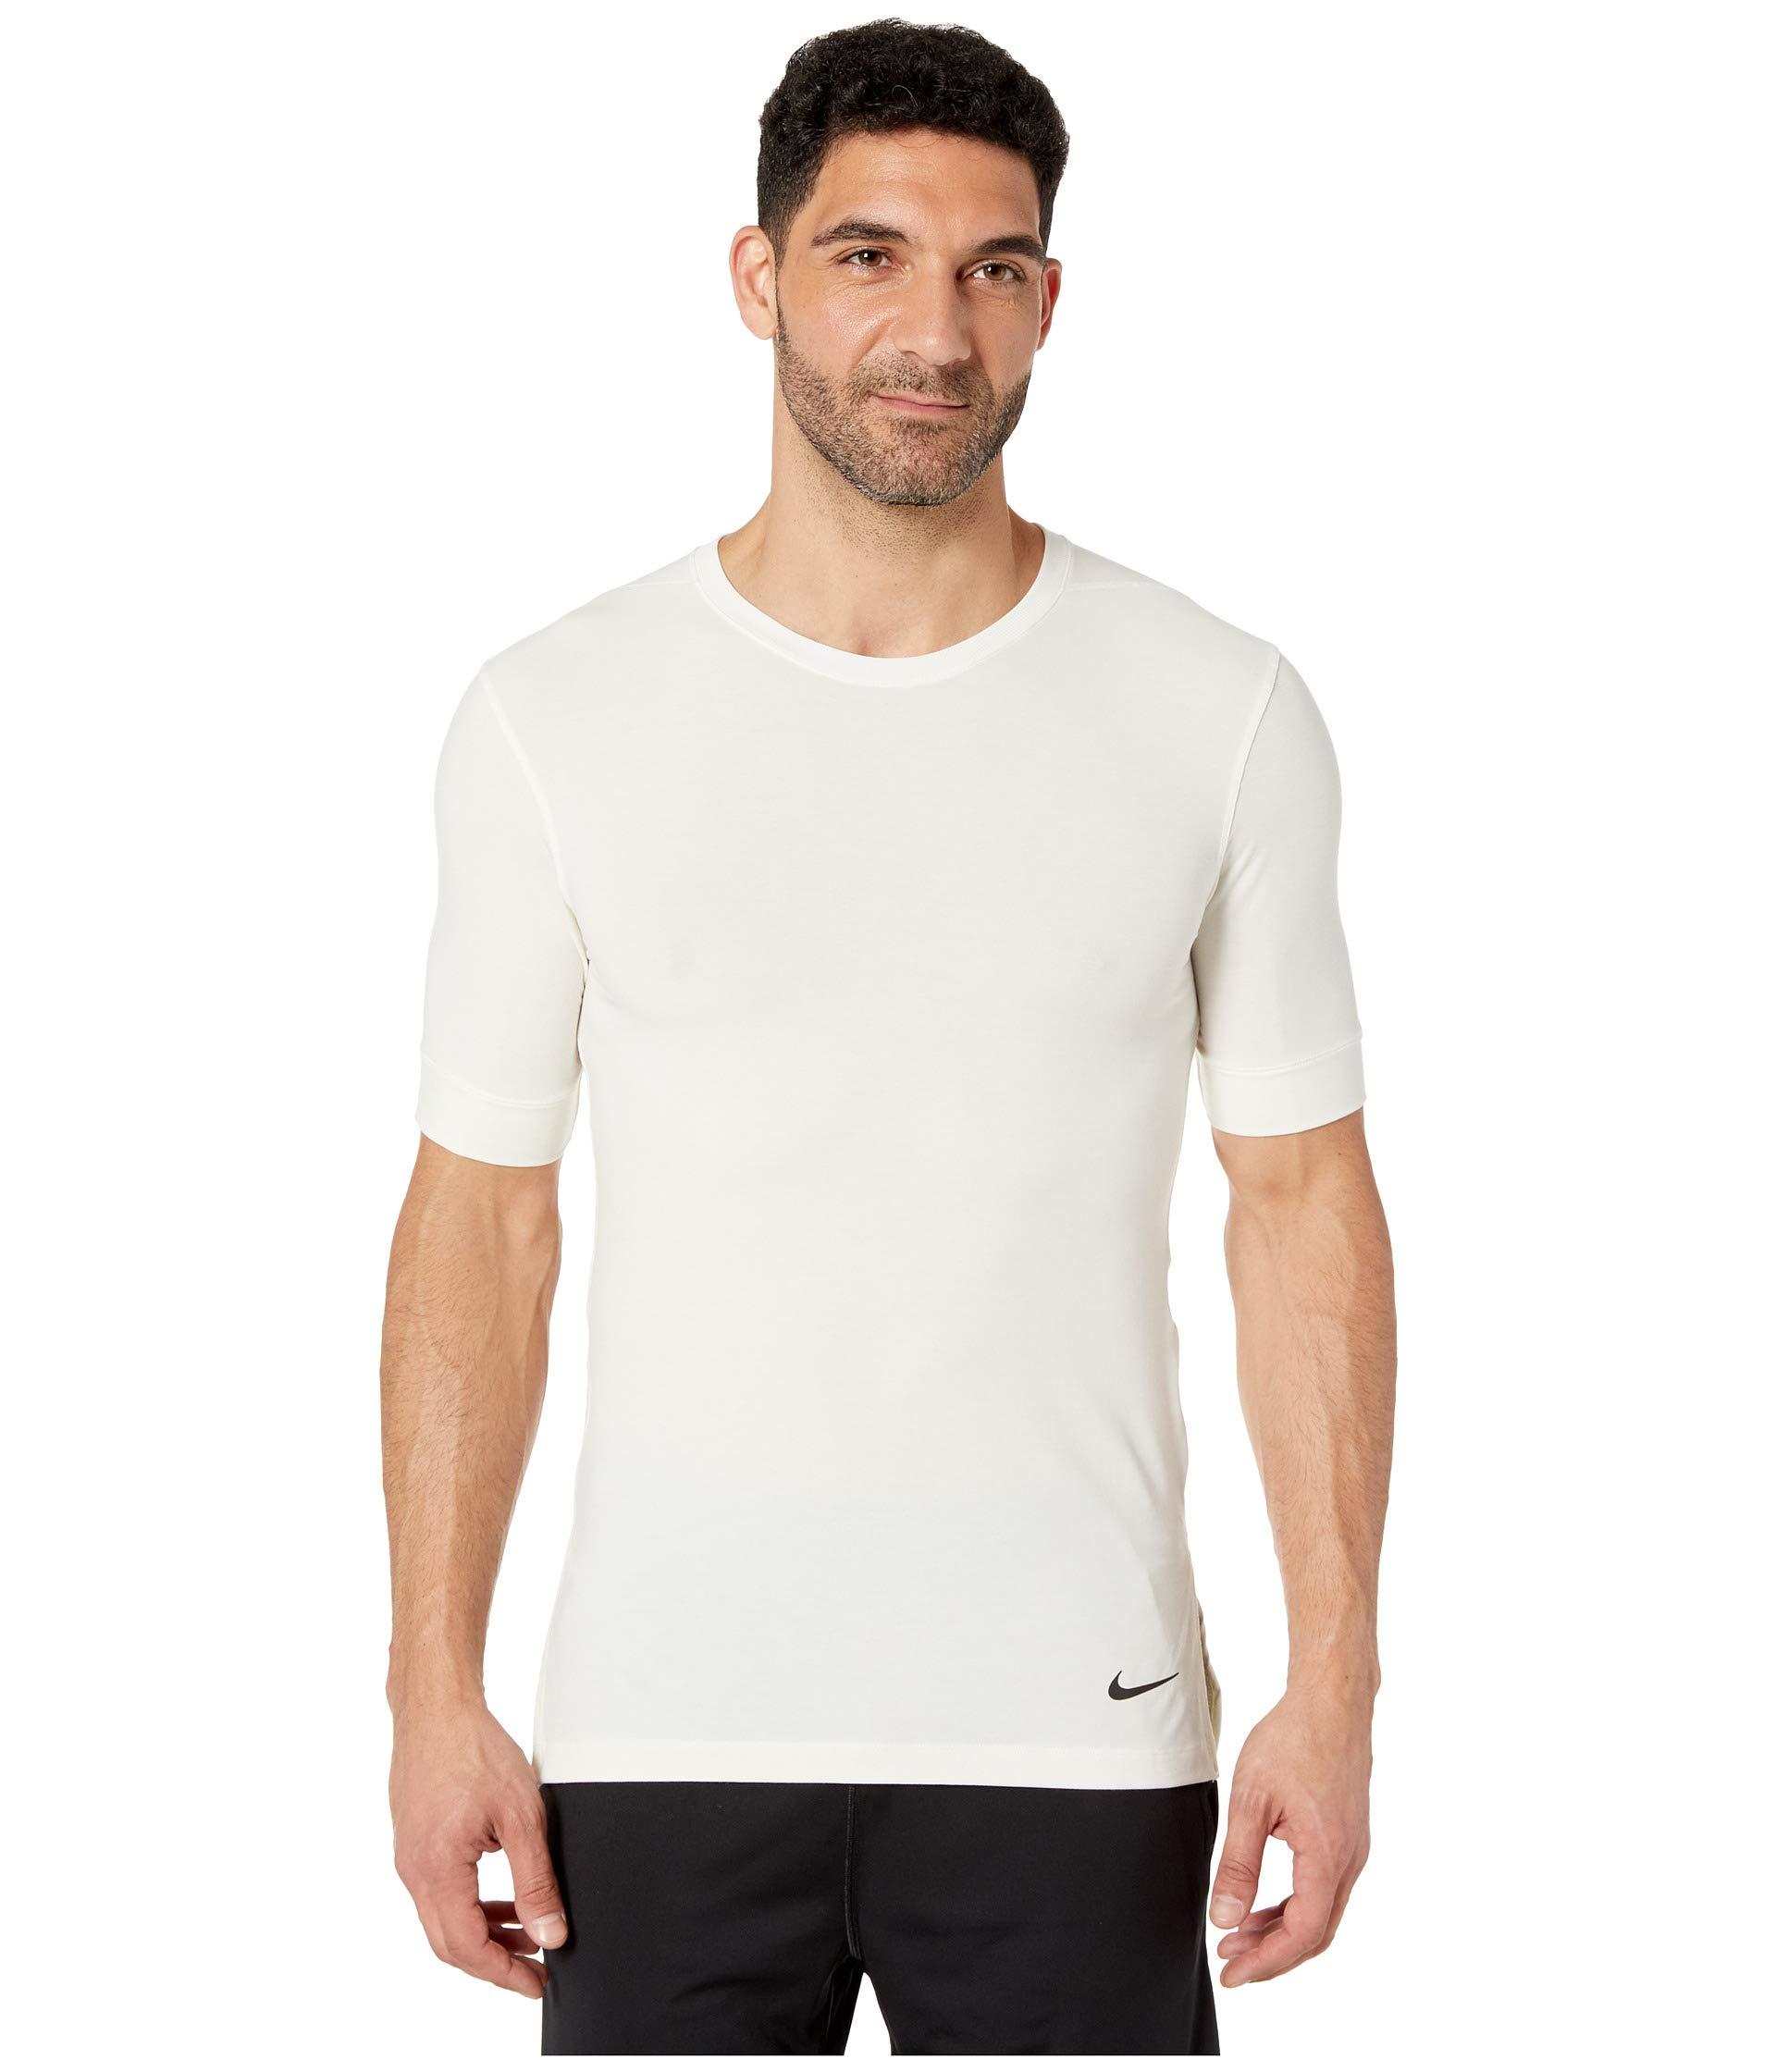 $50 - $100 Dri-FIT Yoga Short Sleeve Shirts.